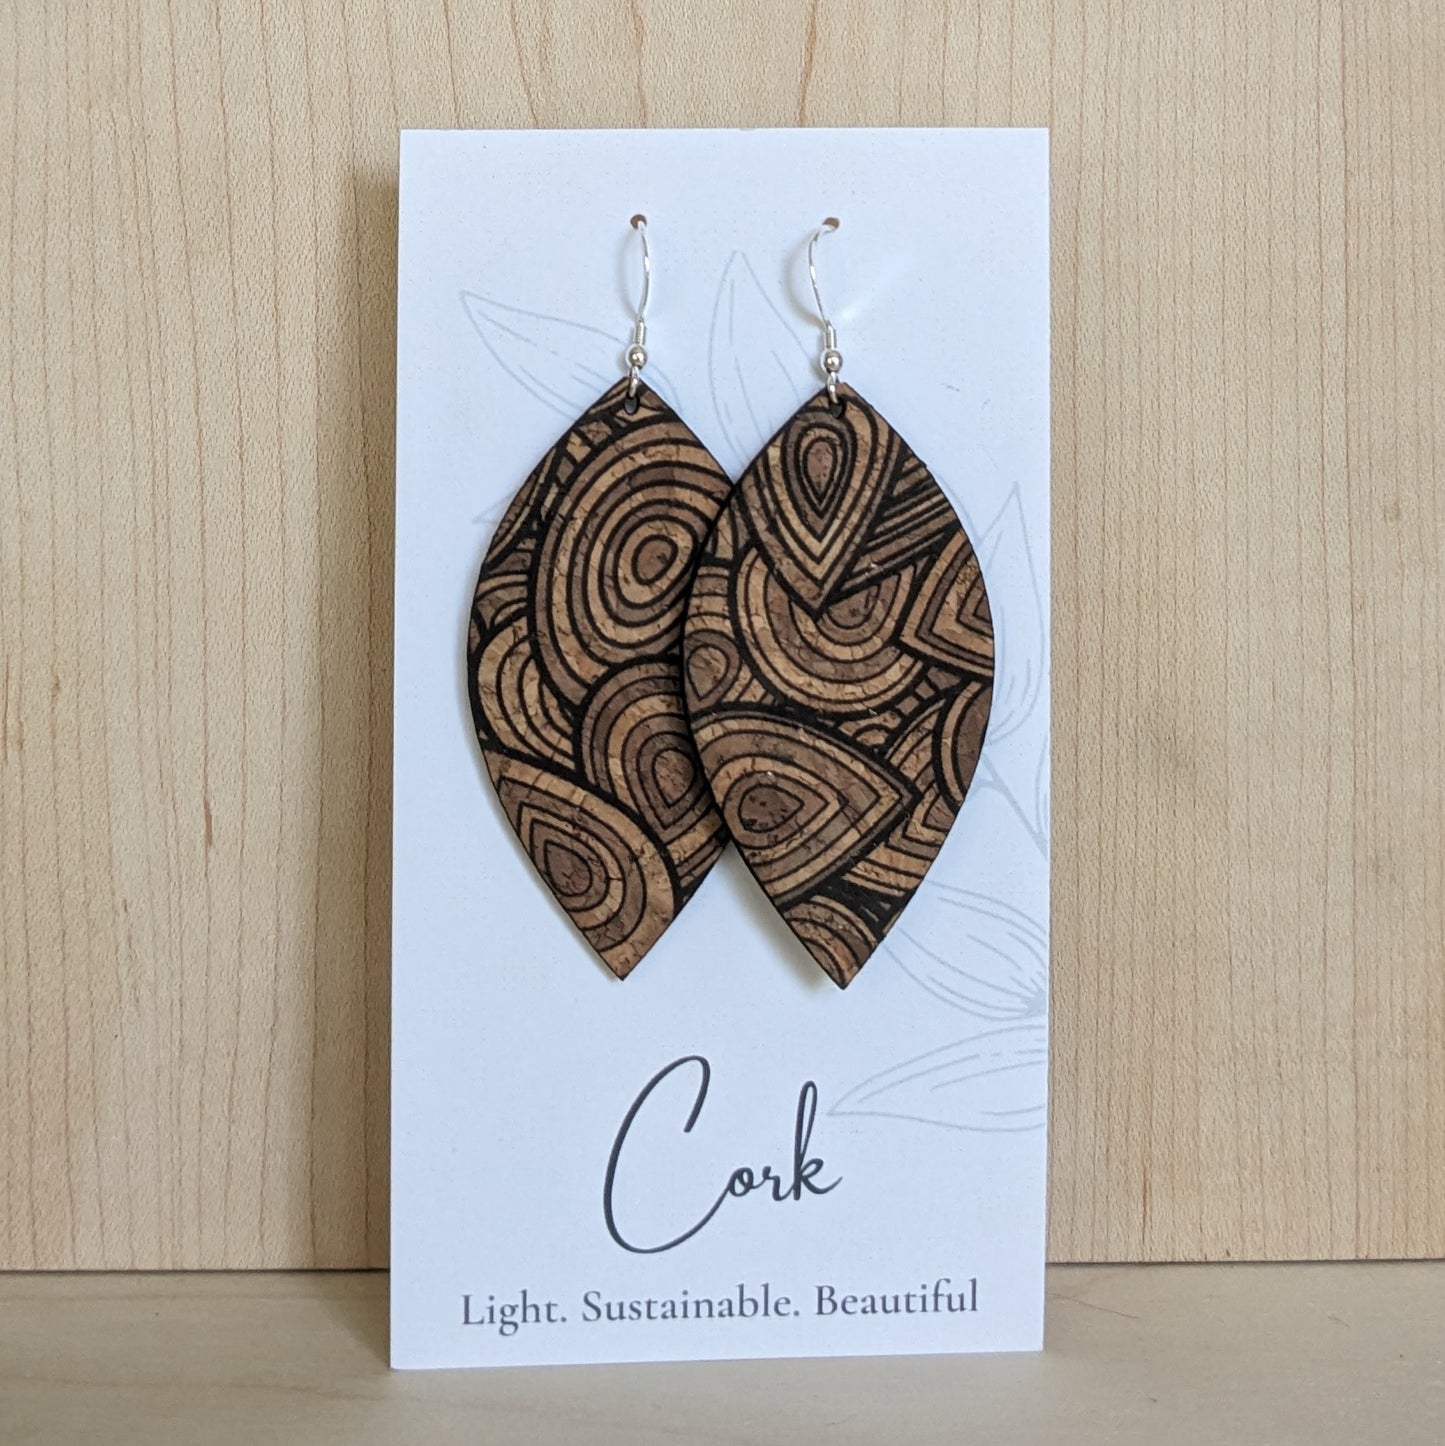 Natural with Wood Grain Cork Earrings - Leaf